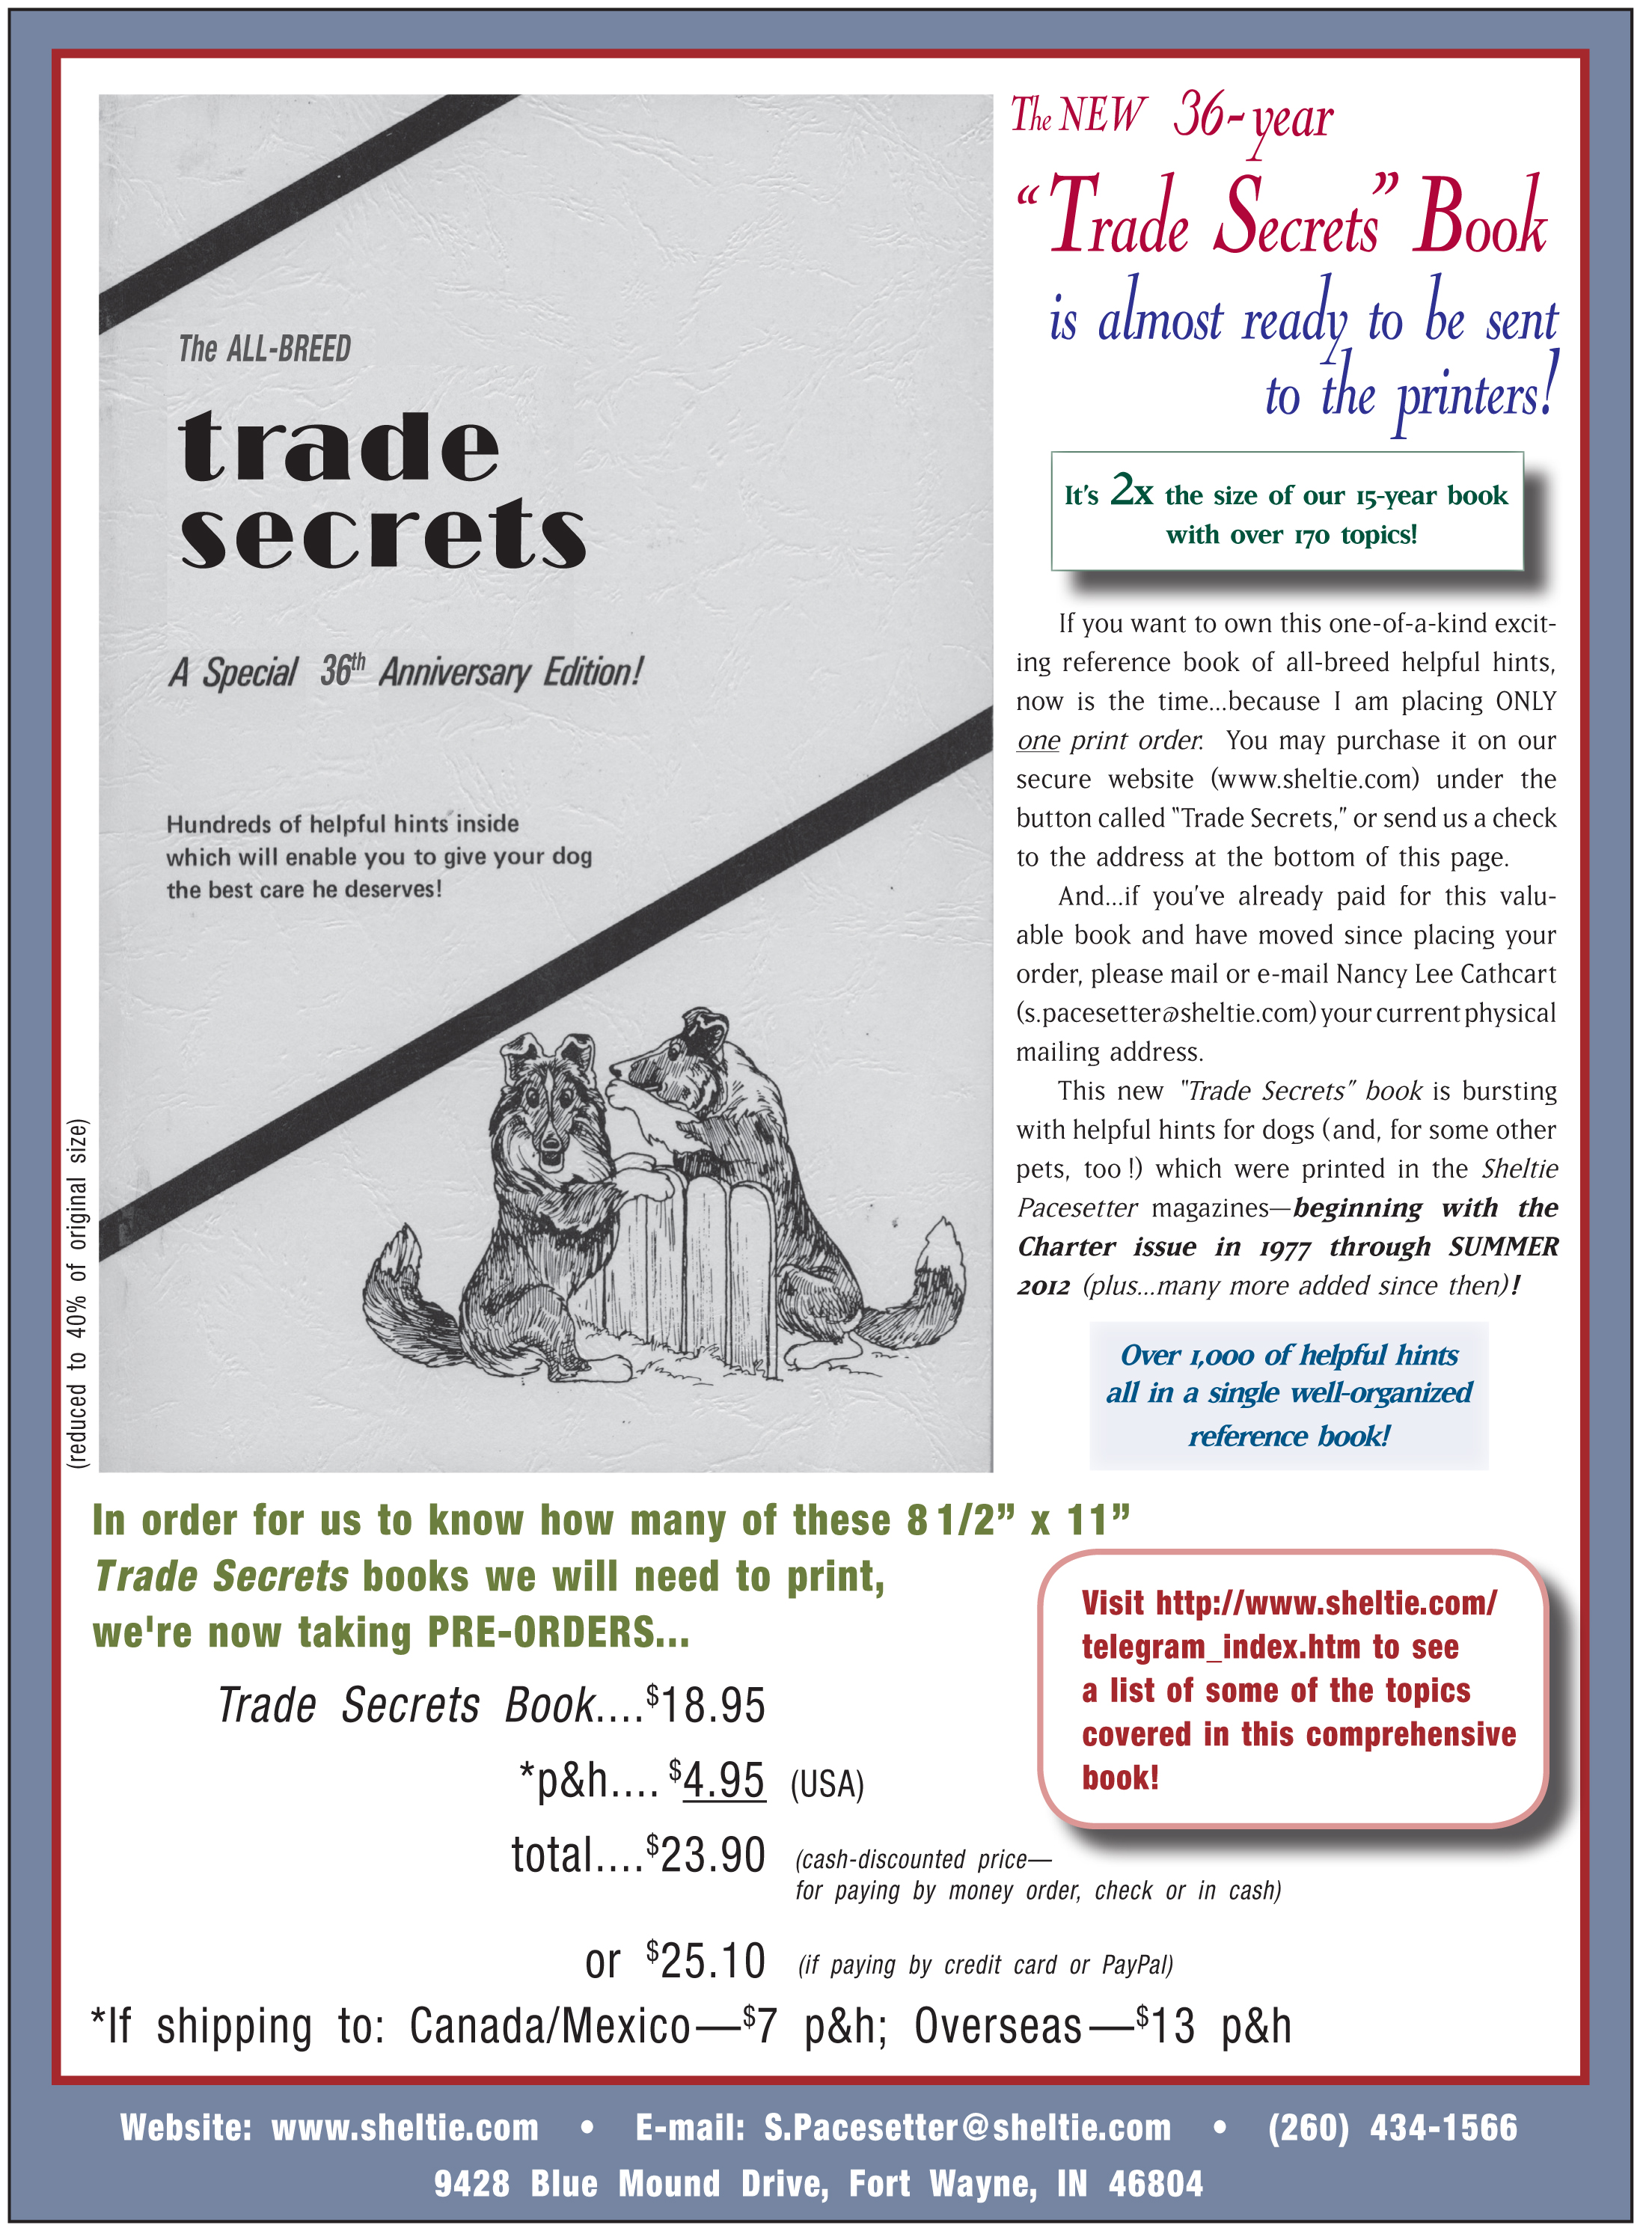 Trade Secrets announcement